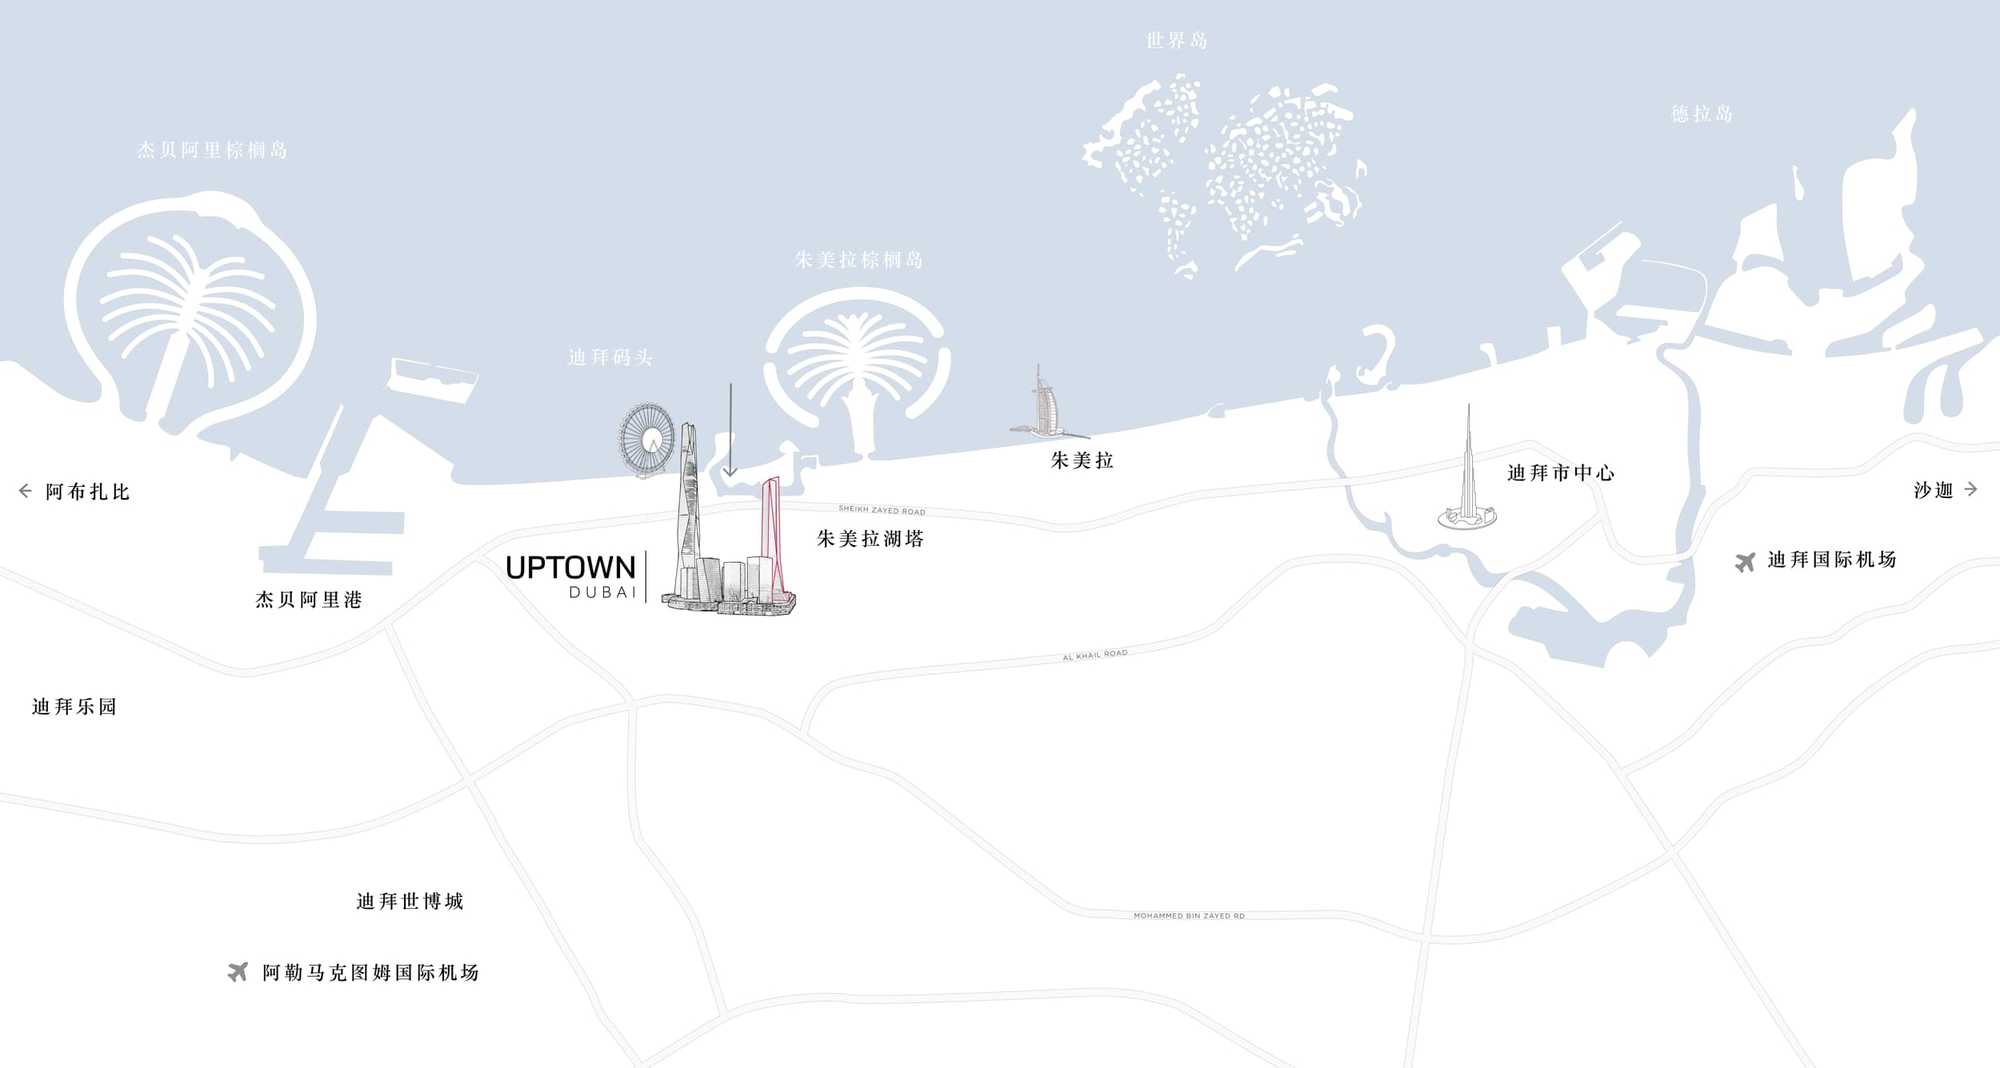 Uptown Dubai Location Chinese